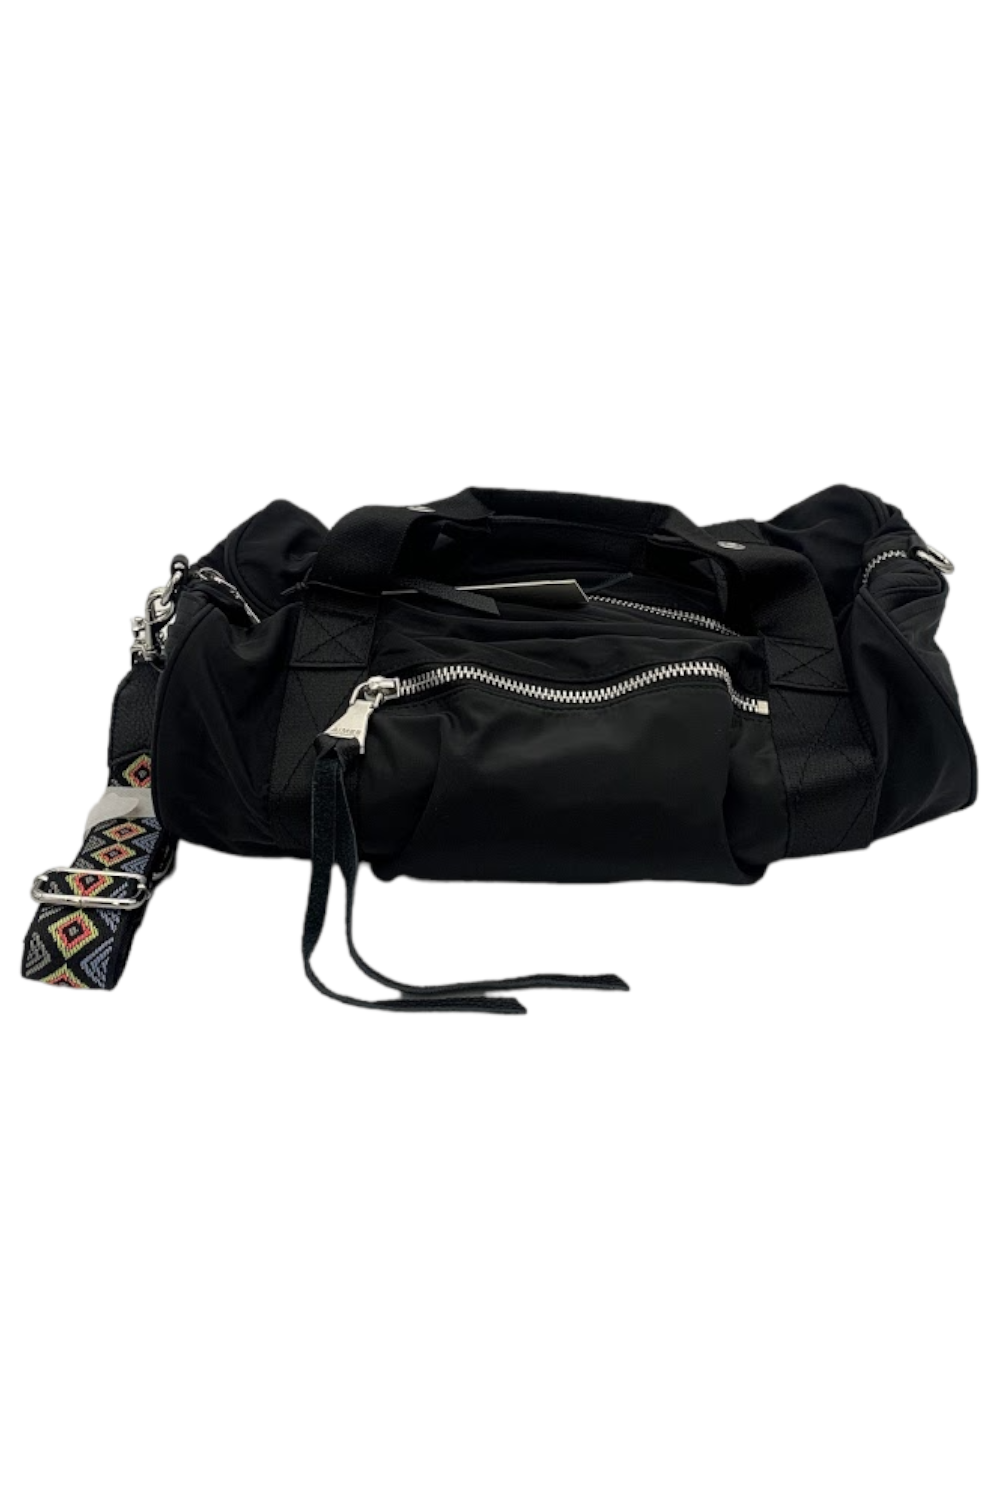 Aimee Kestenberg Nylon Medium Duffle Bag with Leather Trim Black